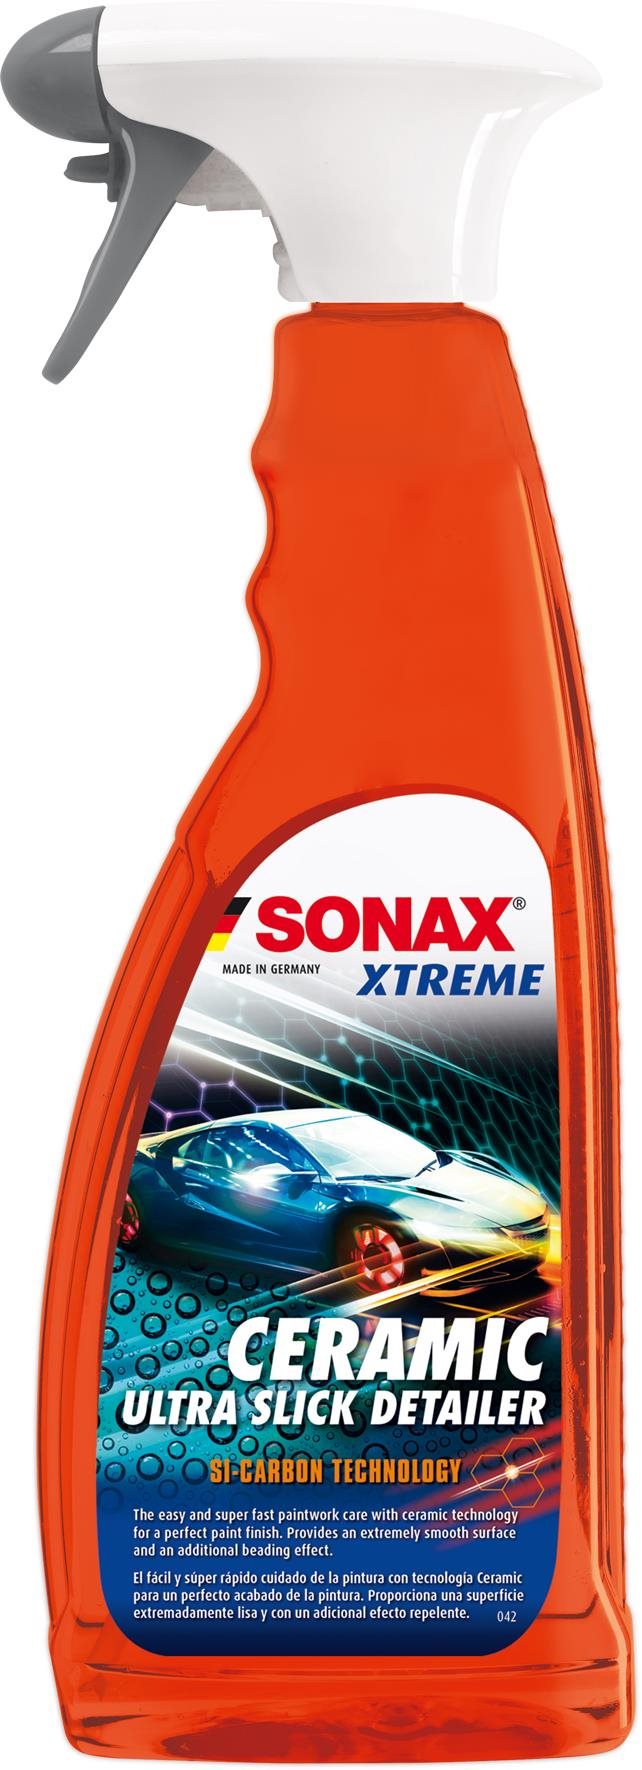 Sonax Xtreme Ceramic Ultra Slick Detailer